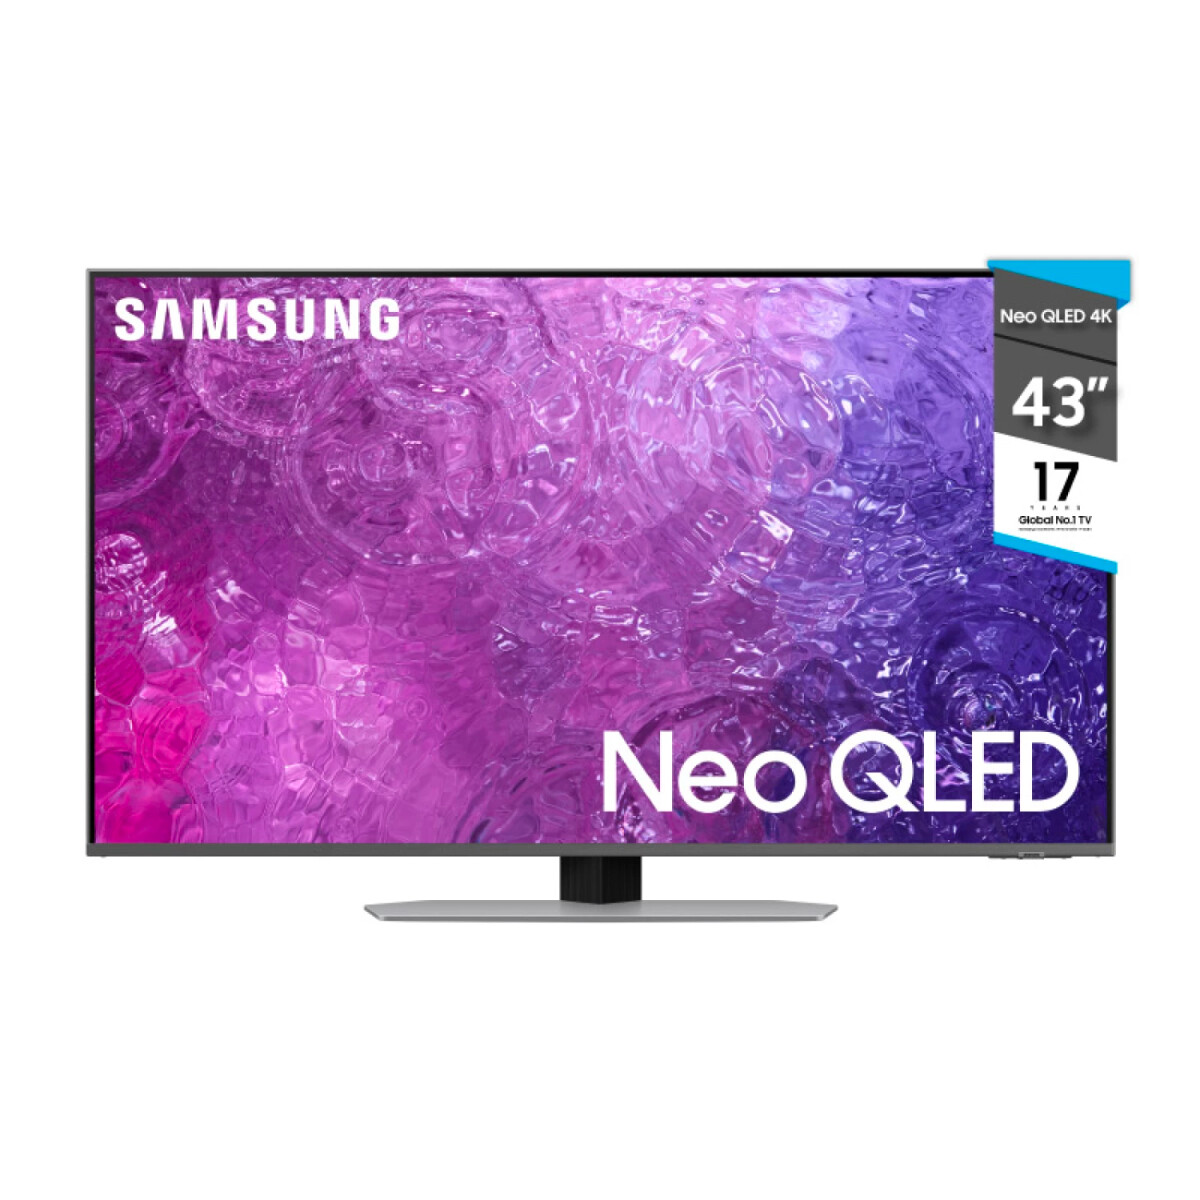 Smart TV Samsung 43" NEO QLED 4K 